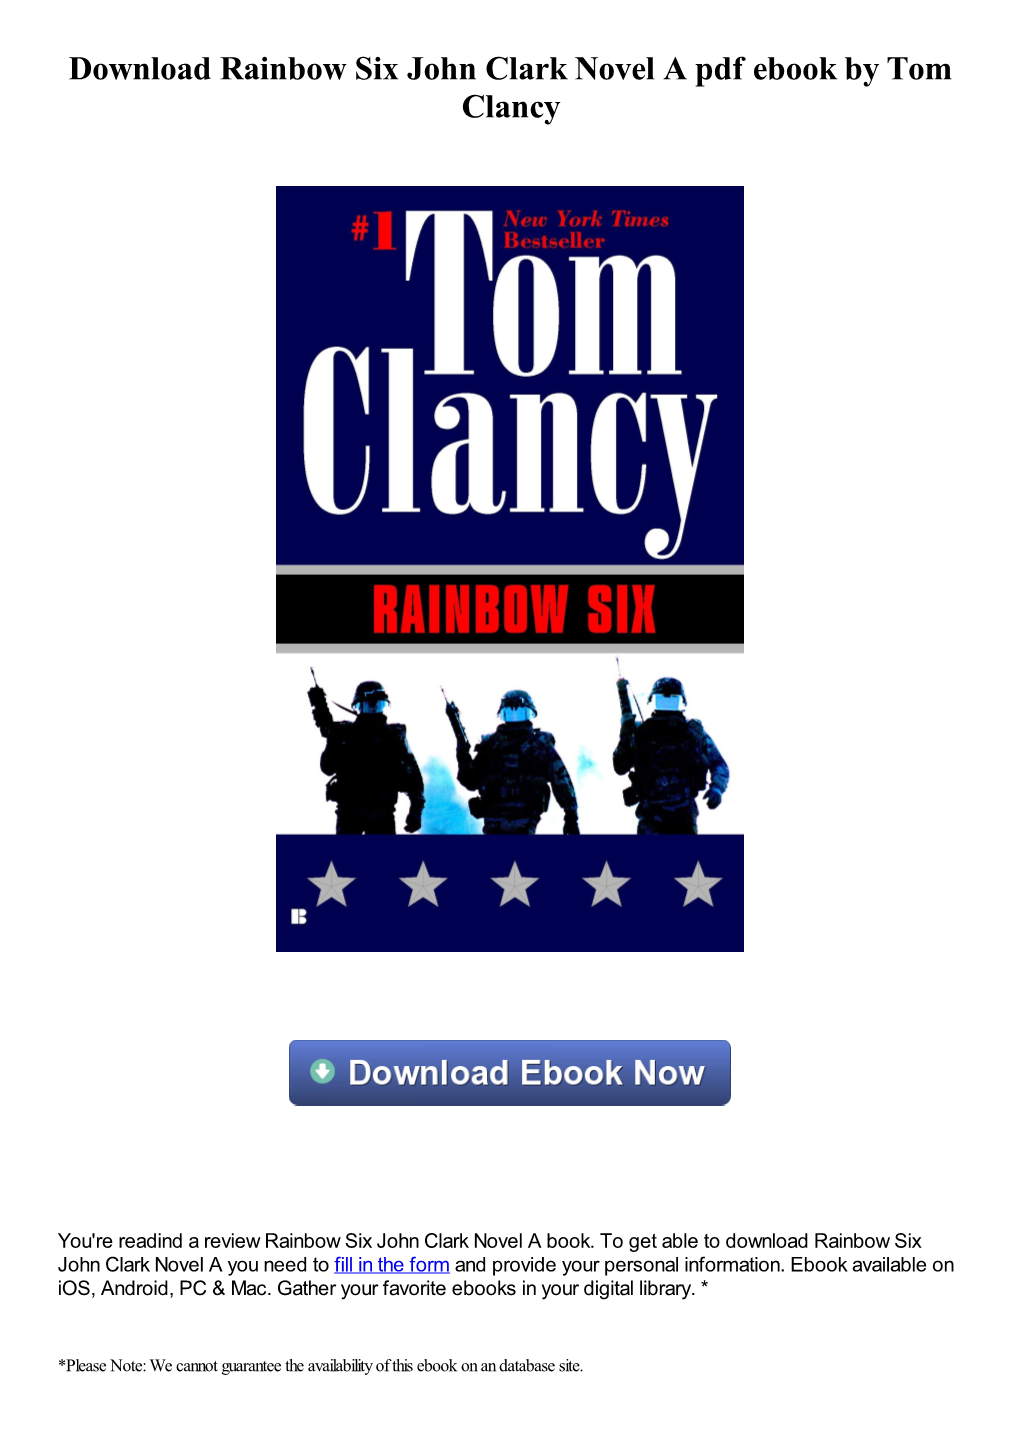 Download Rainbow Six John Clark Novel a Pdf Ebook by Tom Clancy